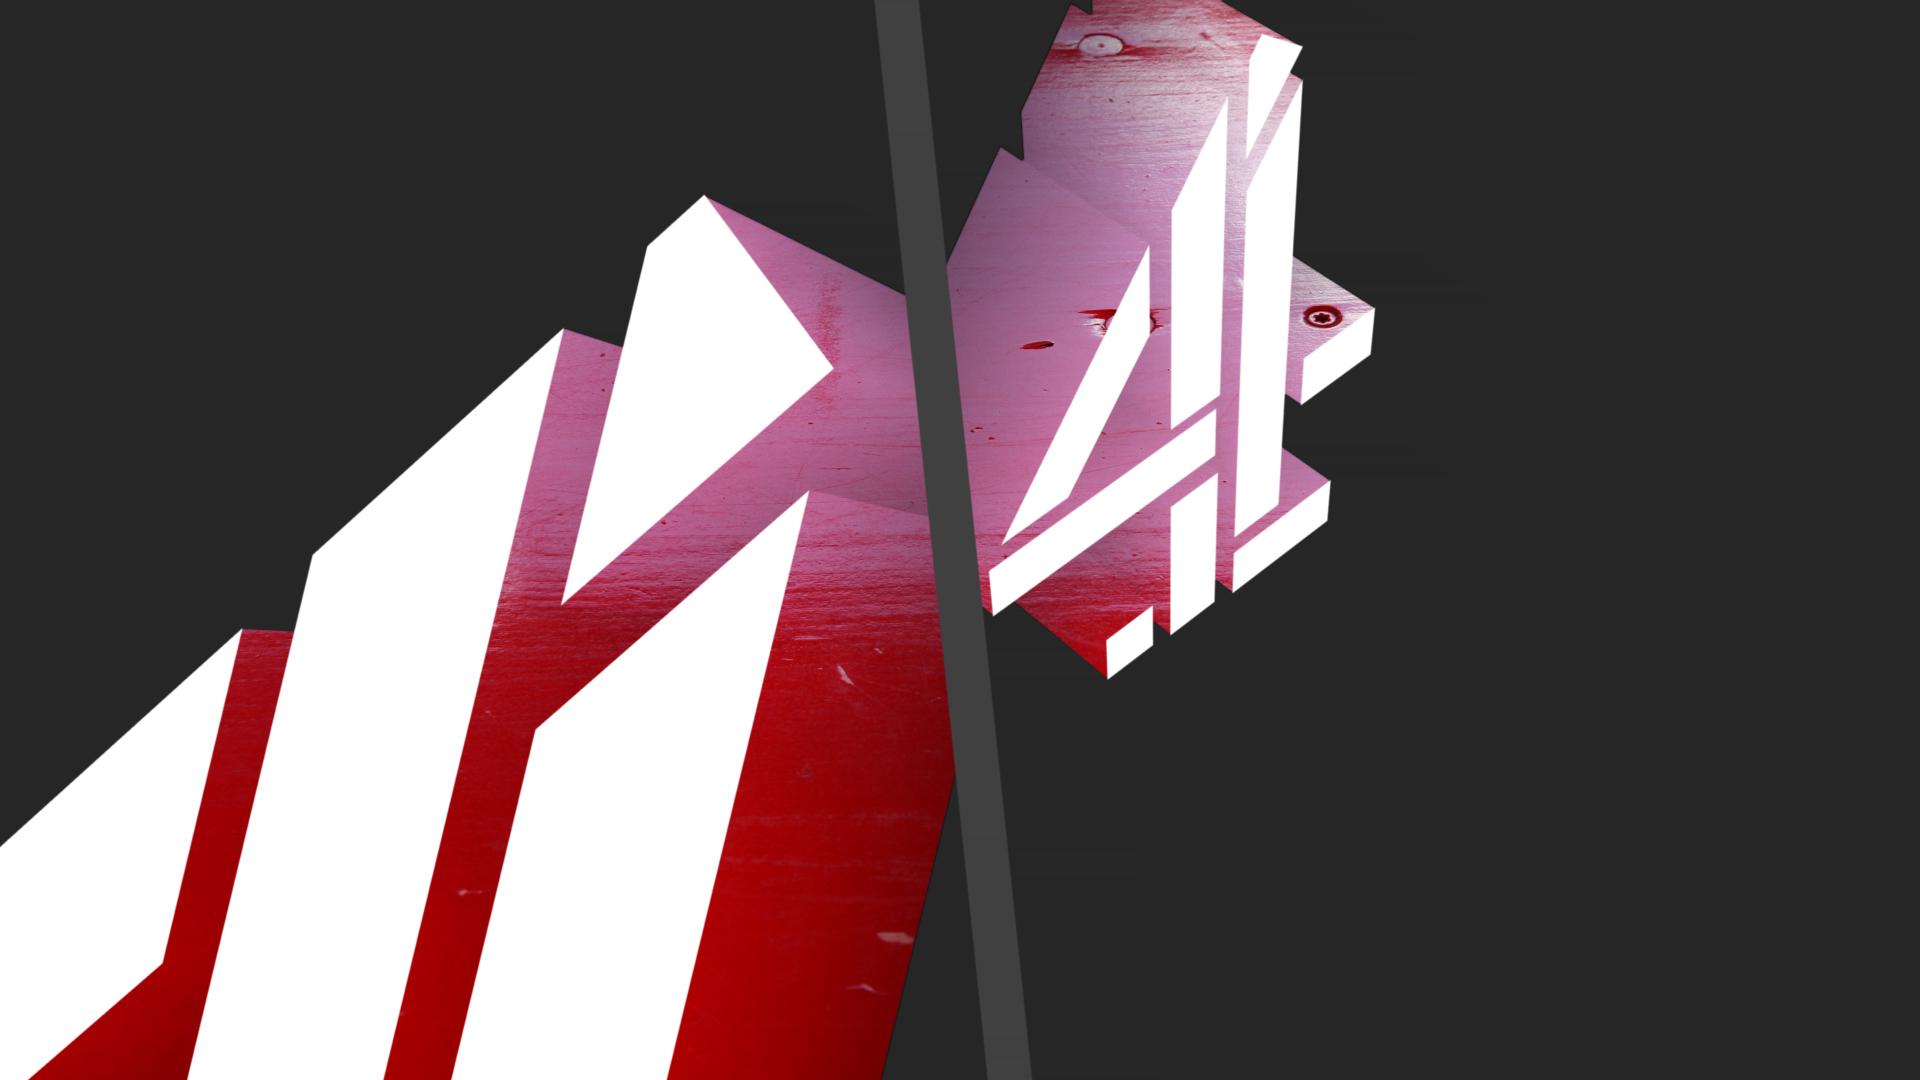 Our ‘cubist’ Channel 4 logo